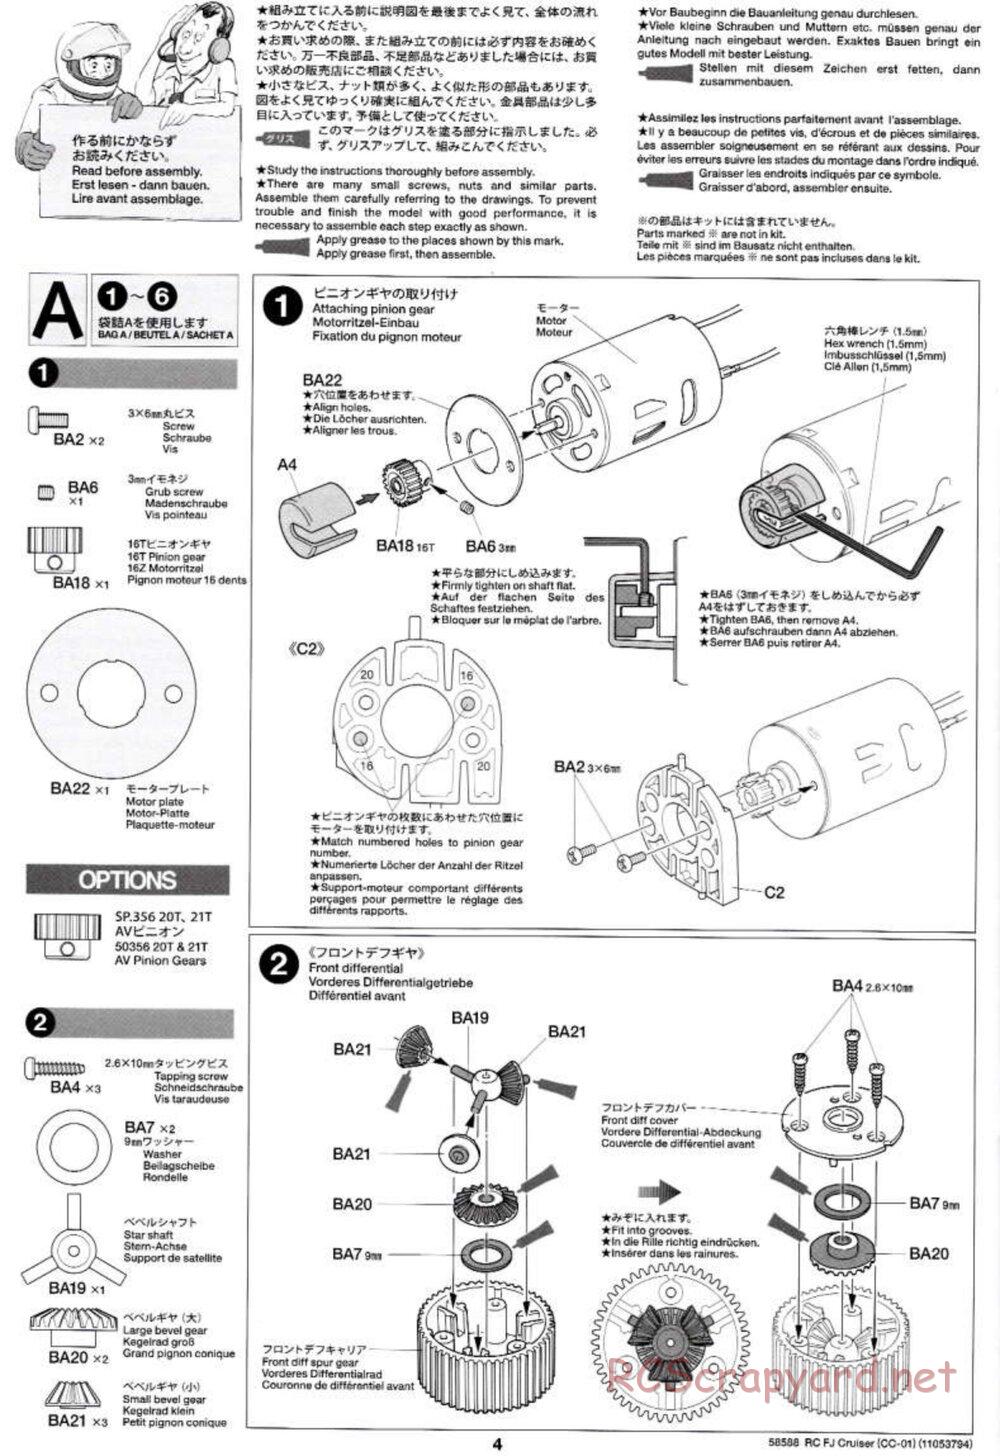 Tamiya - Toyota FJ Cruiser - CC-01 Chassis - Manual - Page 4